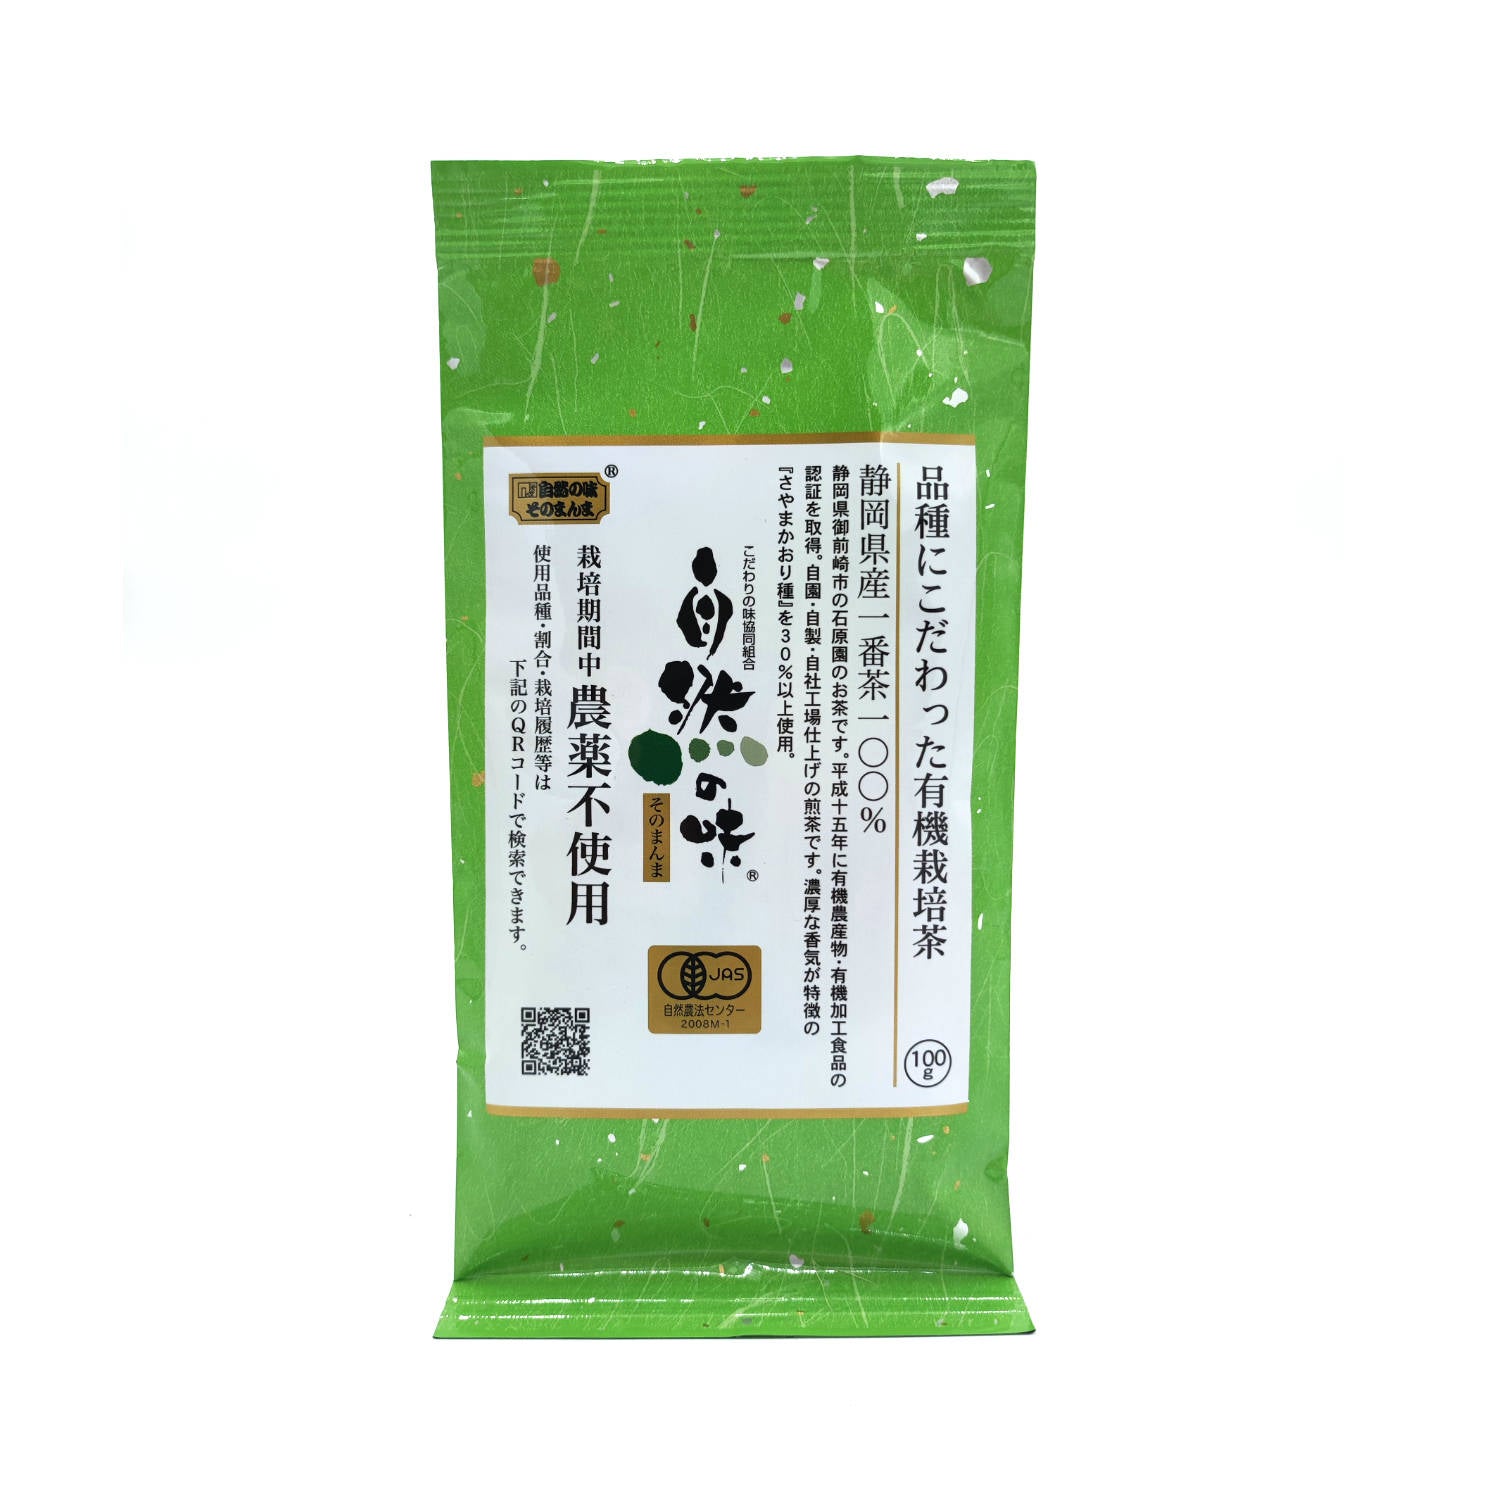 Sayamakaori Ichibancha Rokucha Tea 100g